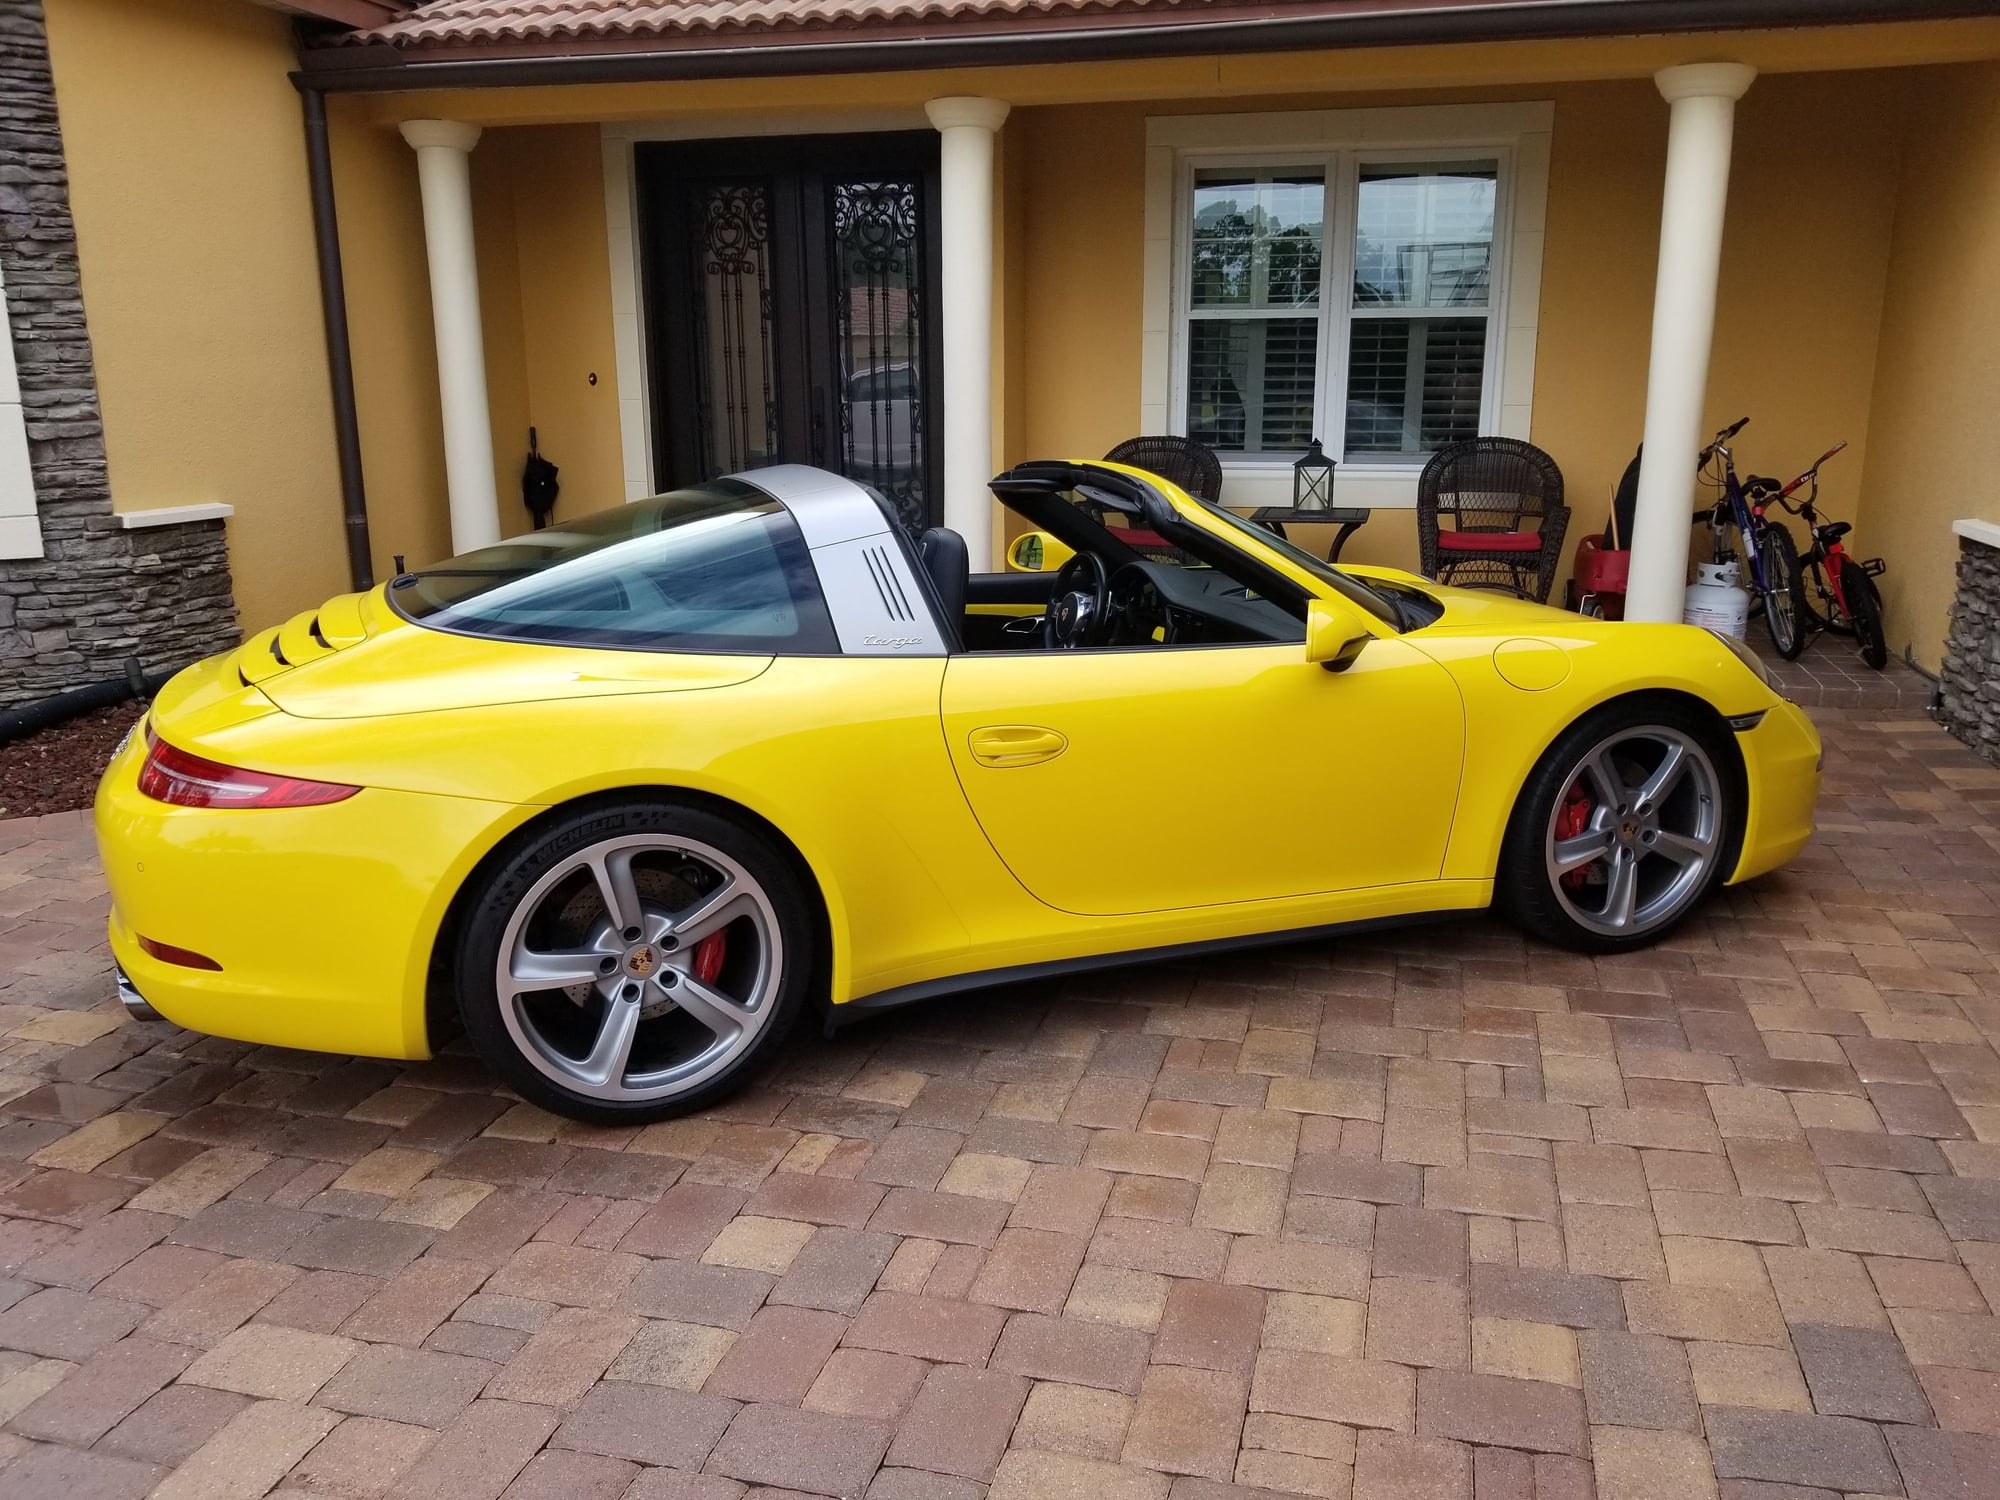 2014 Porsche 911 - 2014 Porsche 991.1 Targa 37k miles PDK - Used - VIN WP0BB2A95ES133246 - 37,215 Miles - 6 cyl - AWD - Automatic - Convertible - Yellow - Orlando, FL 32746, United States